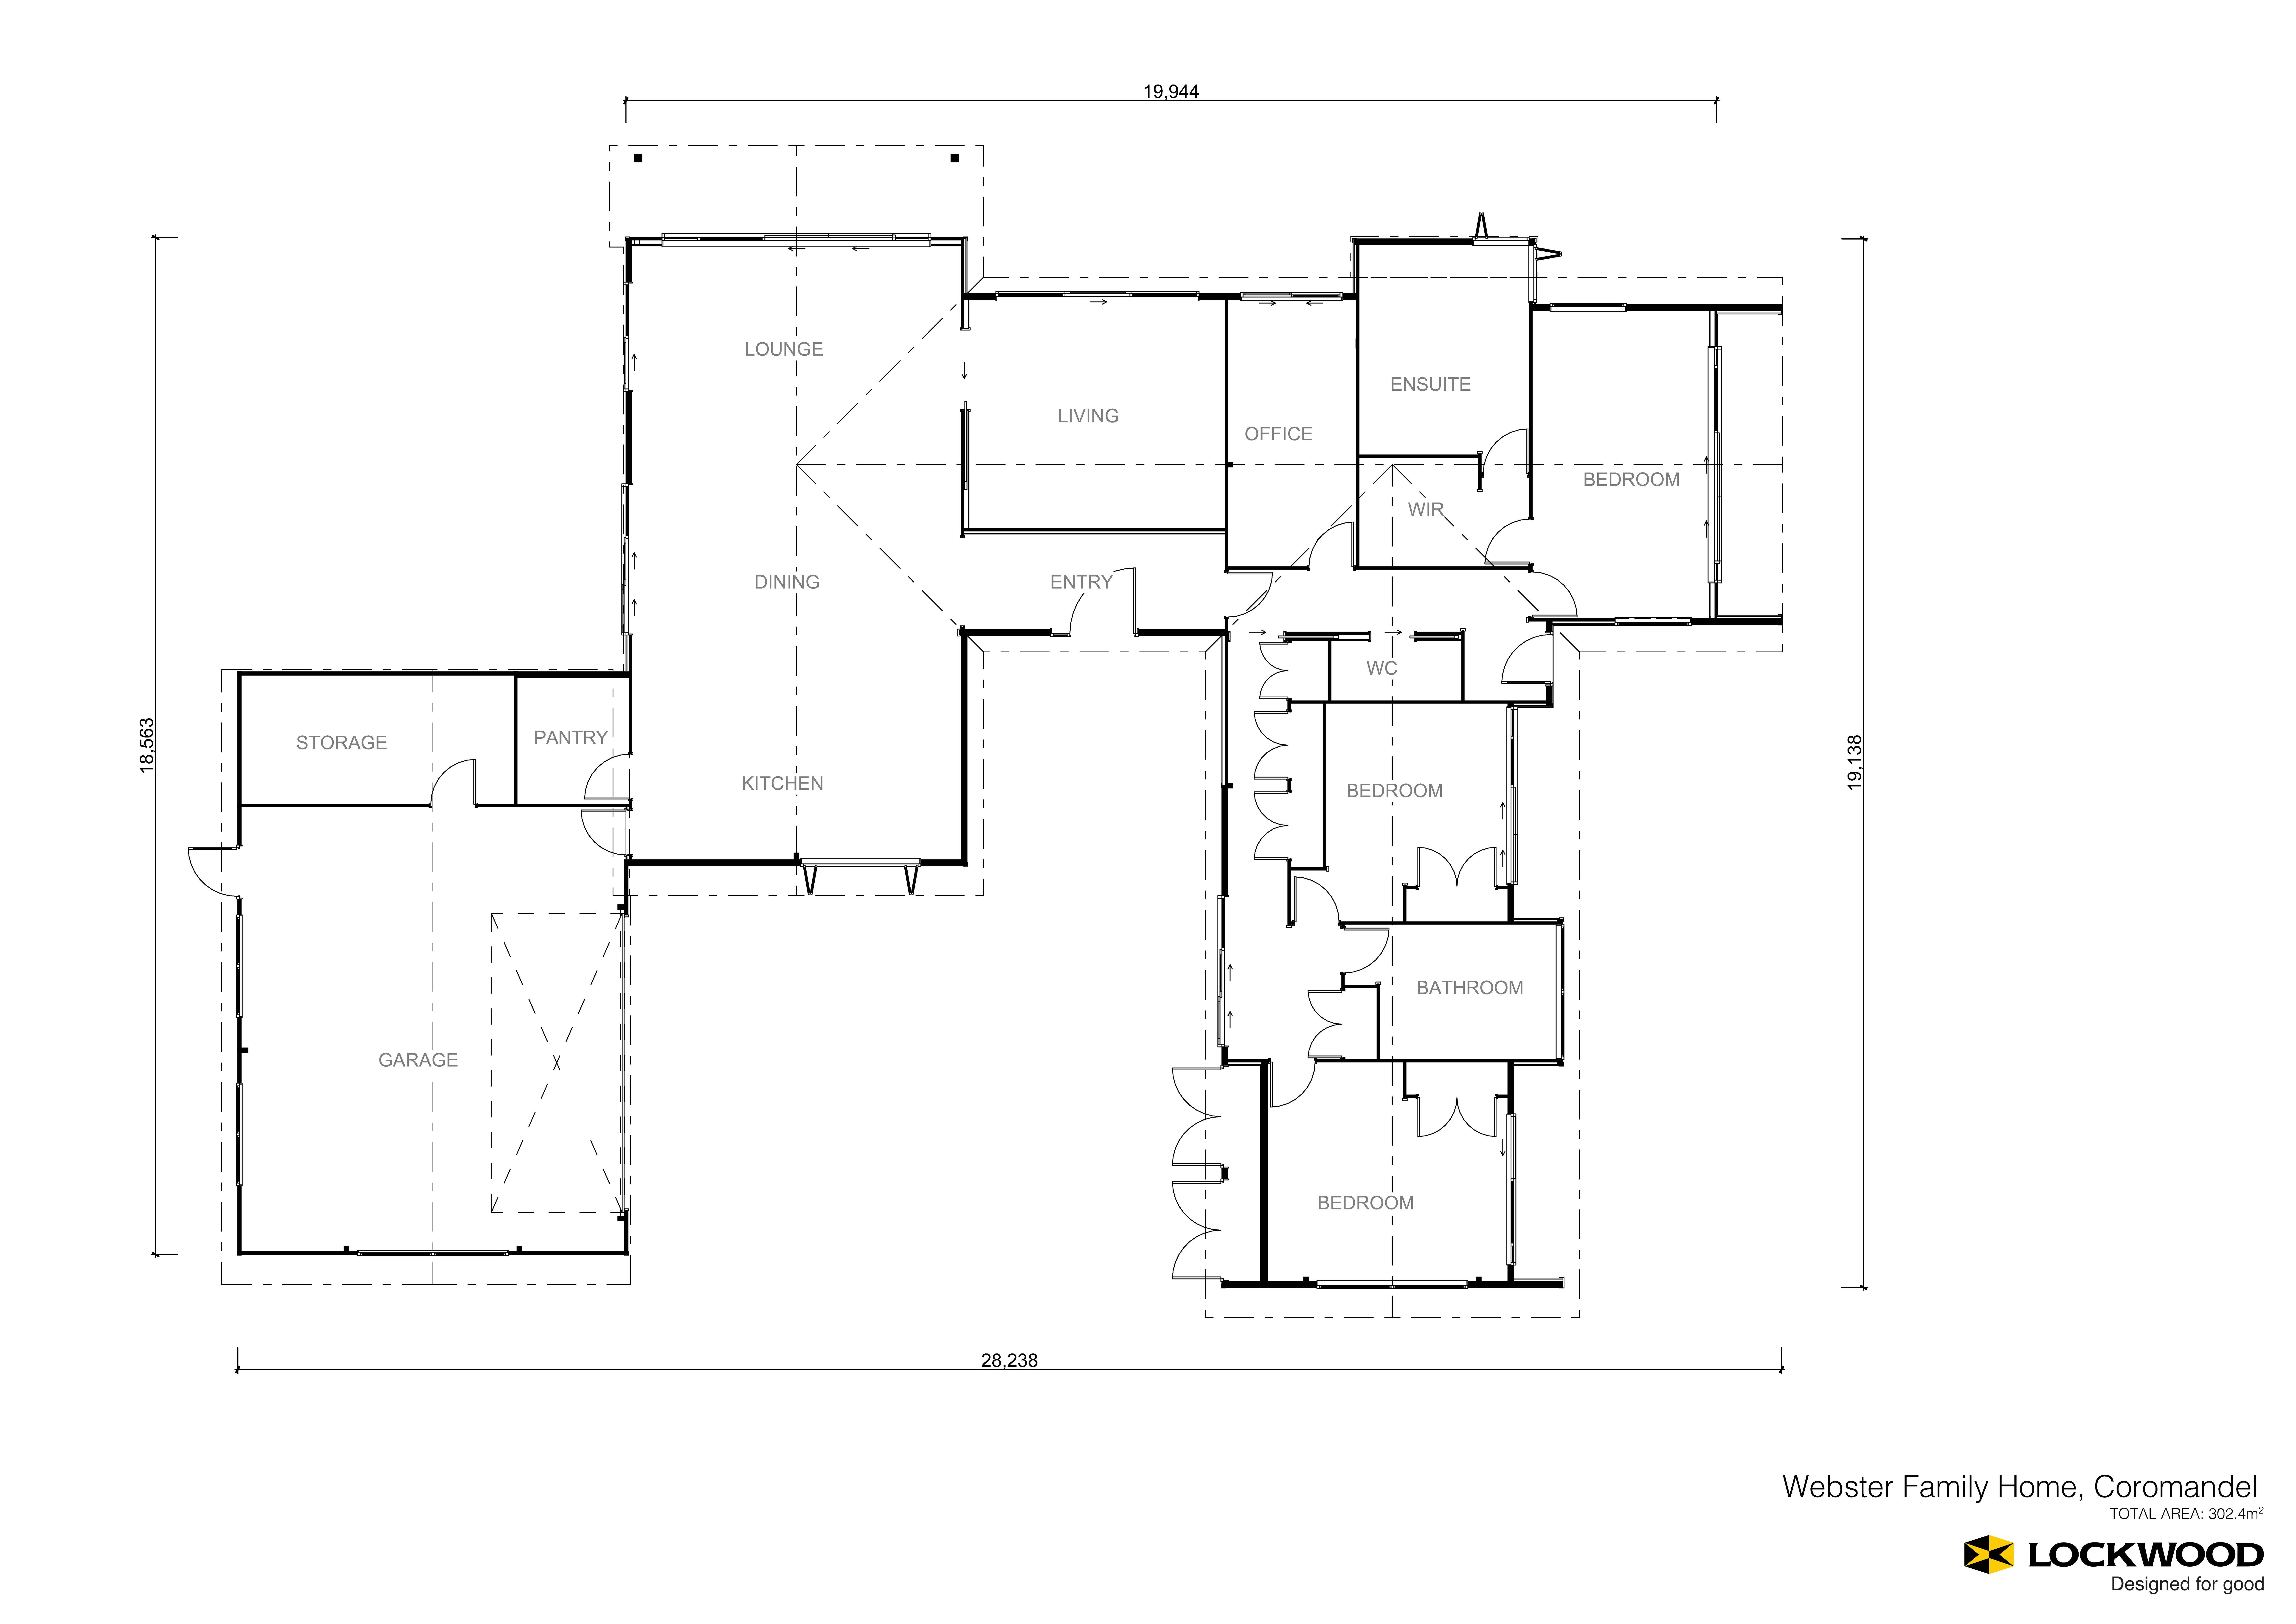 Lockwood Webster Family Home floor plan